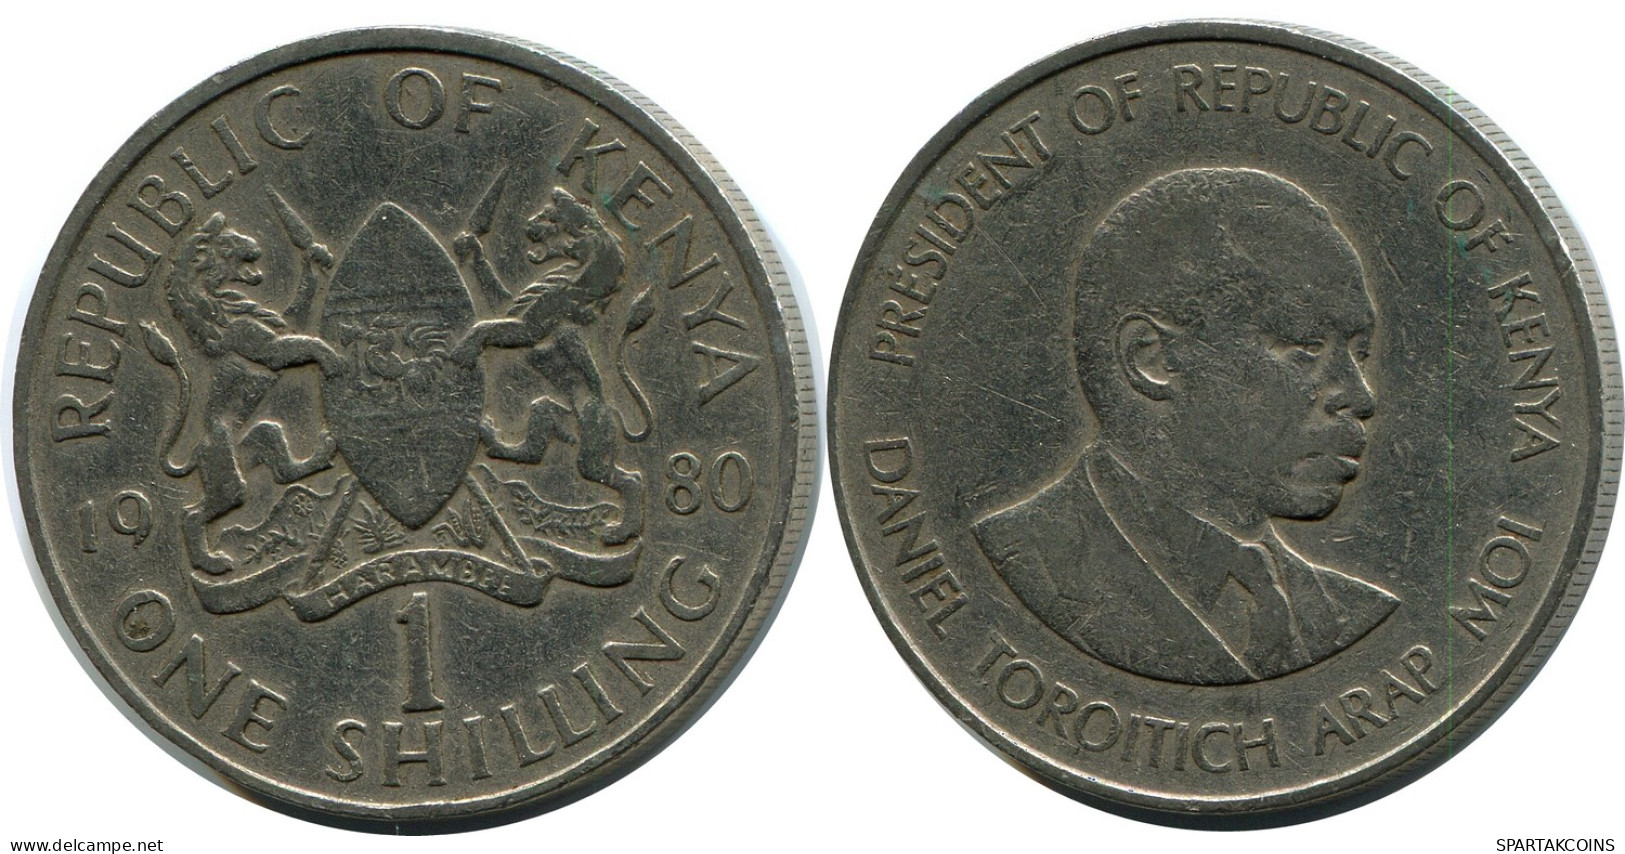 1 SHILLING 1980 KENYA Coin #AZ191.U - Kenia